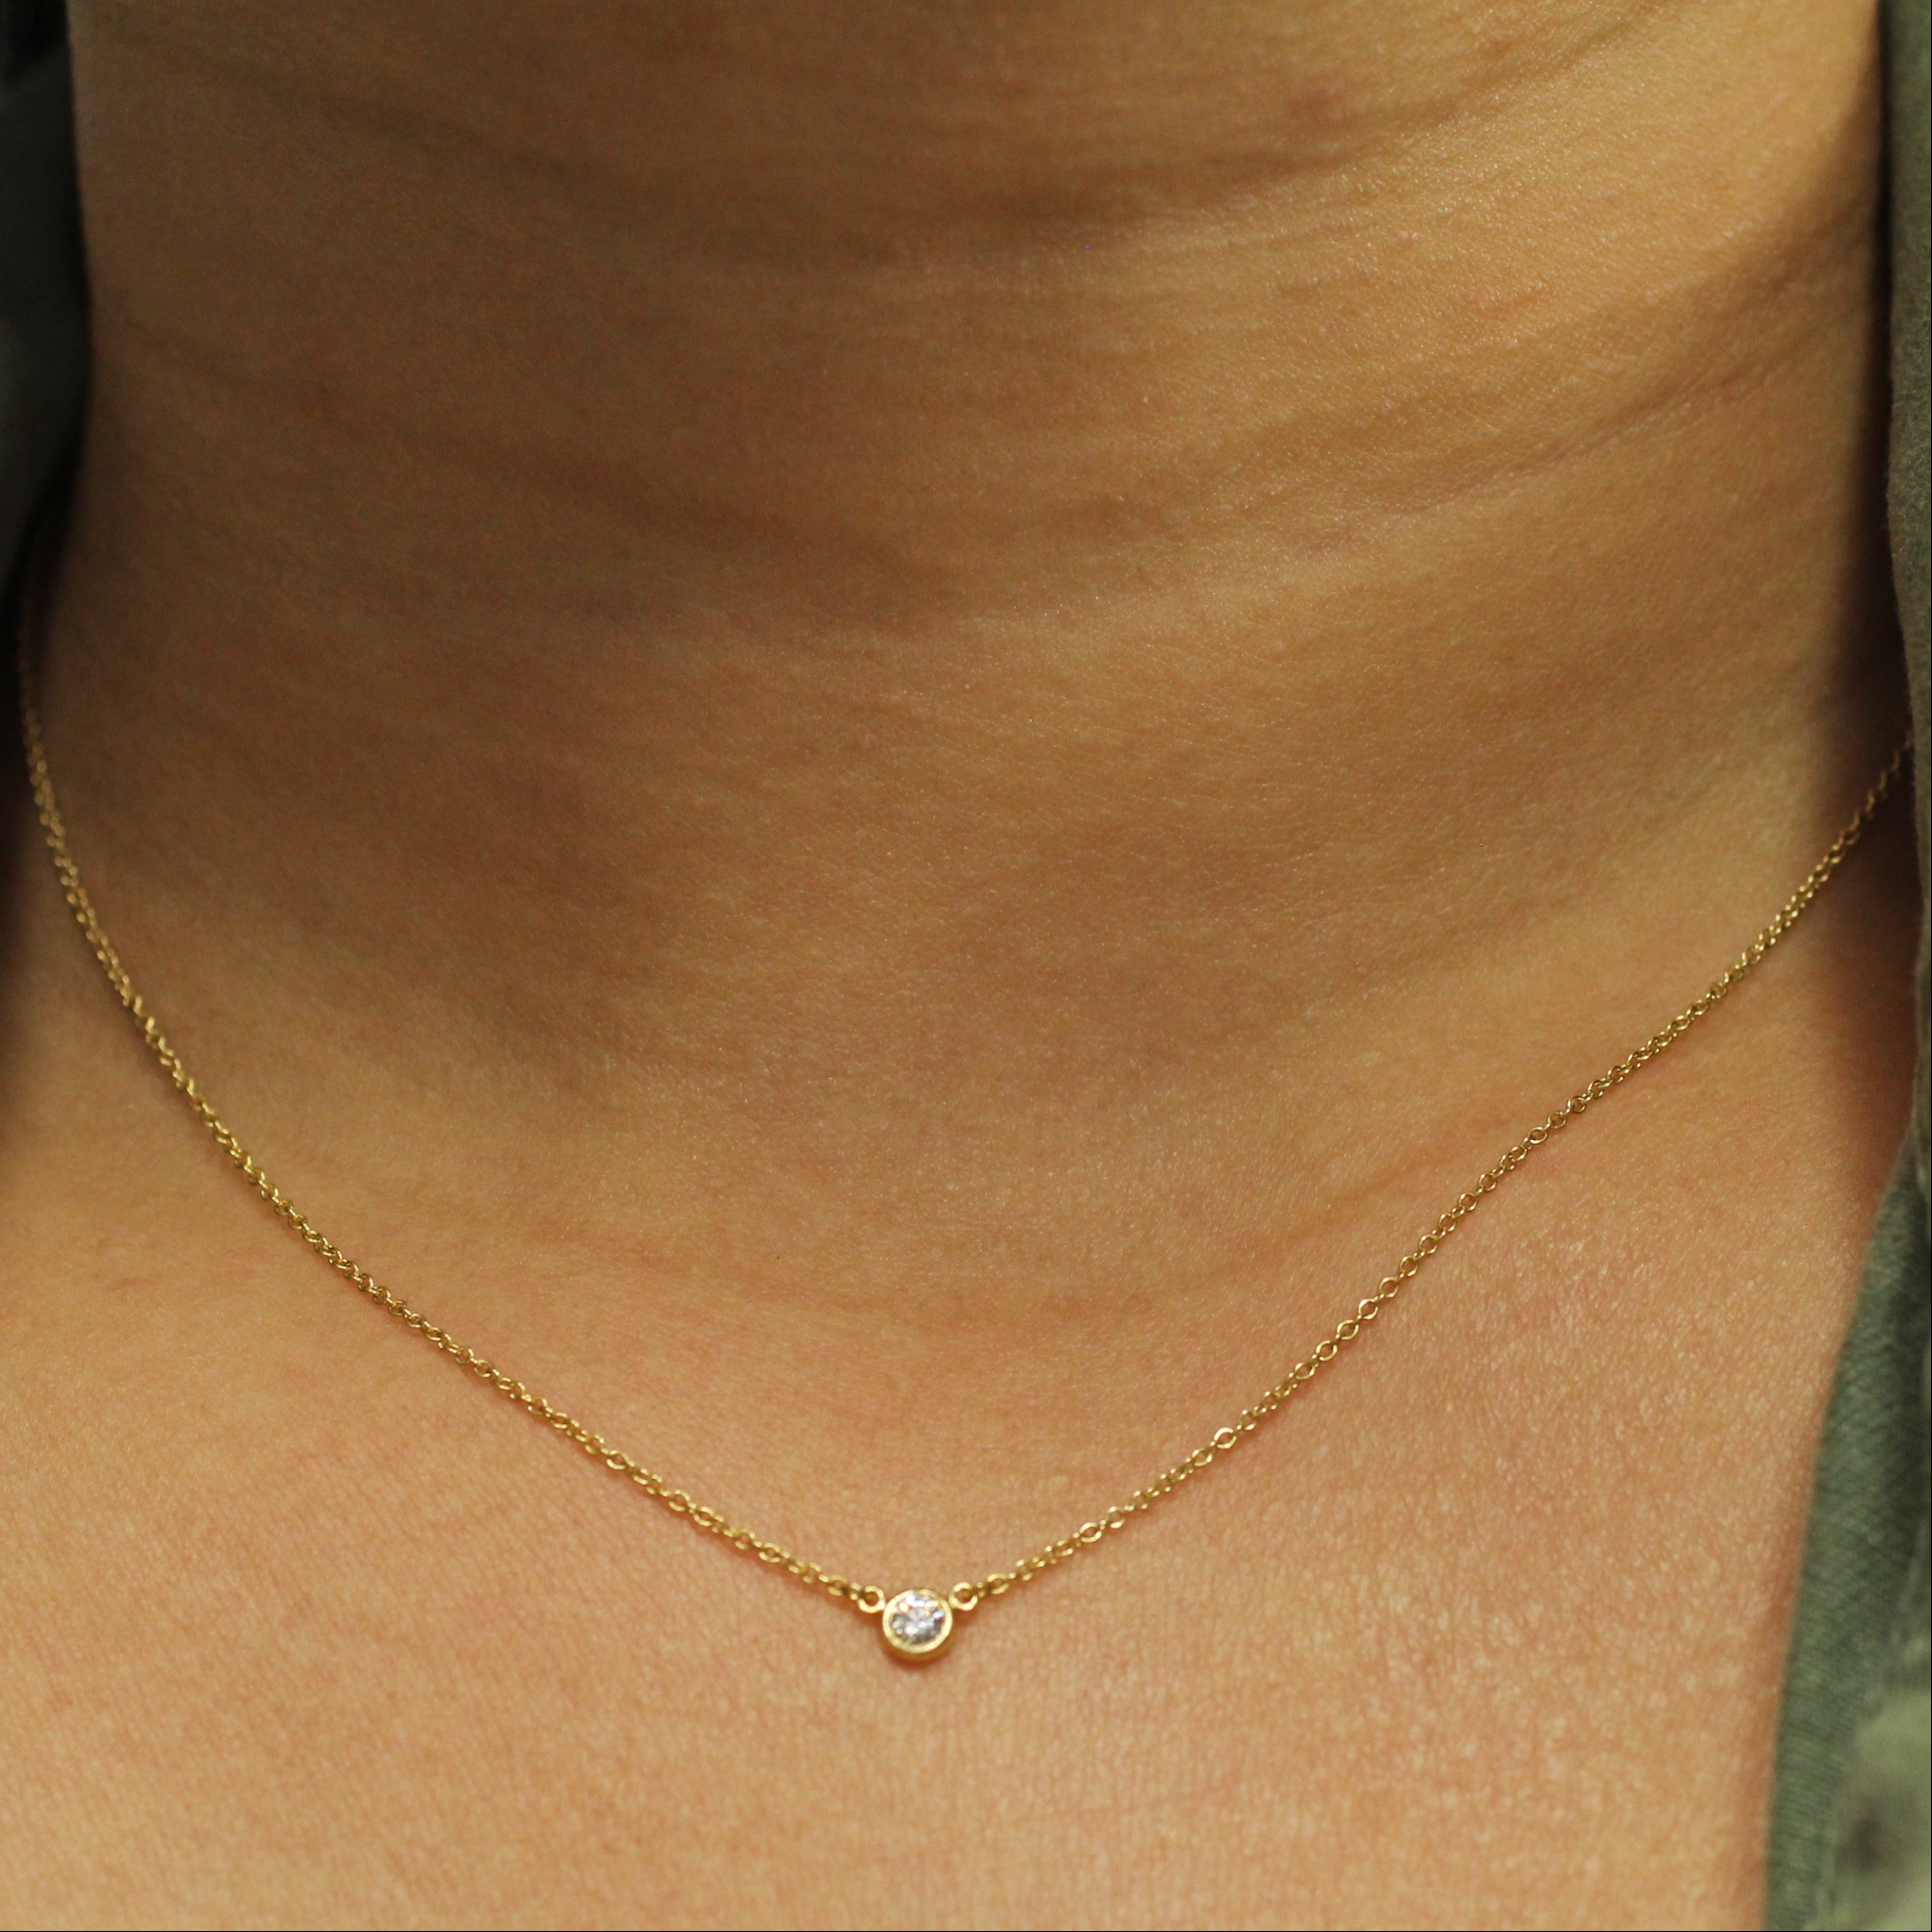 tiffany diamond necklace by the yard